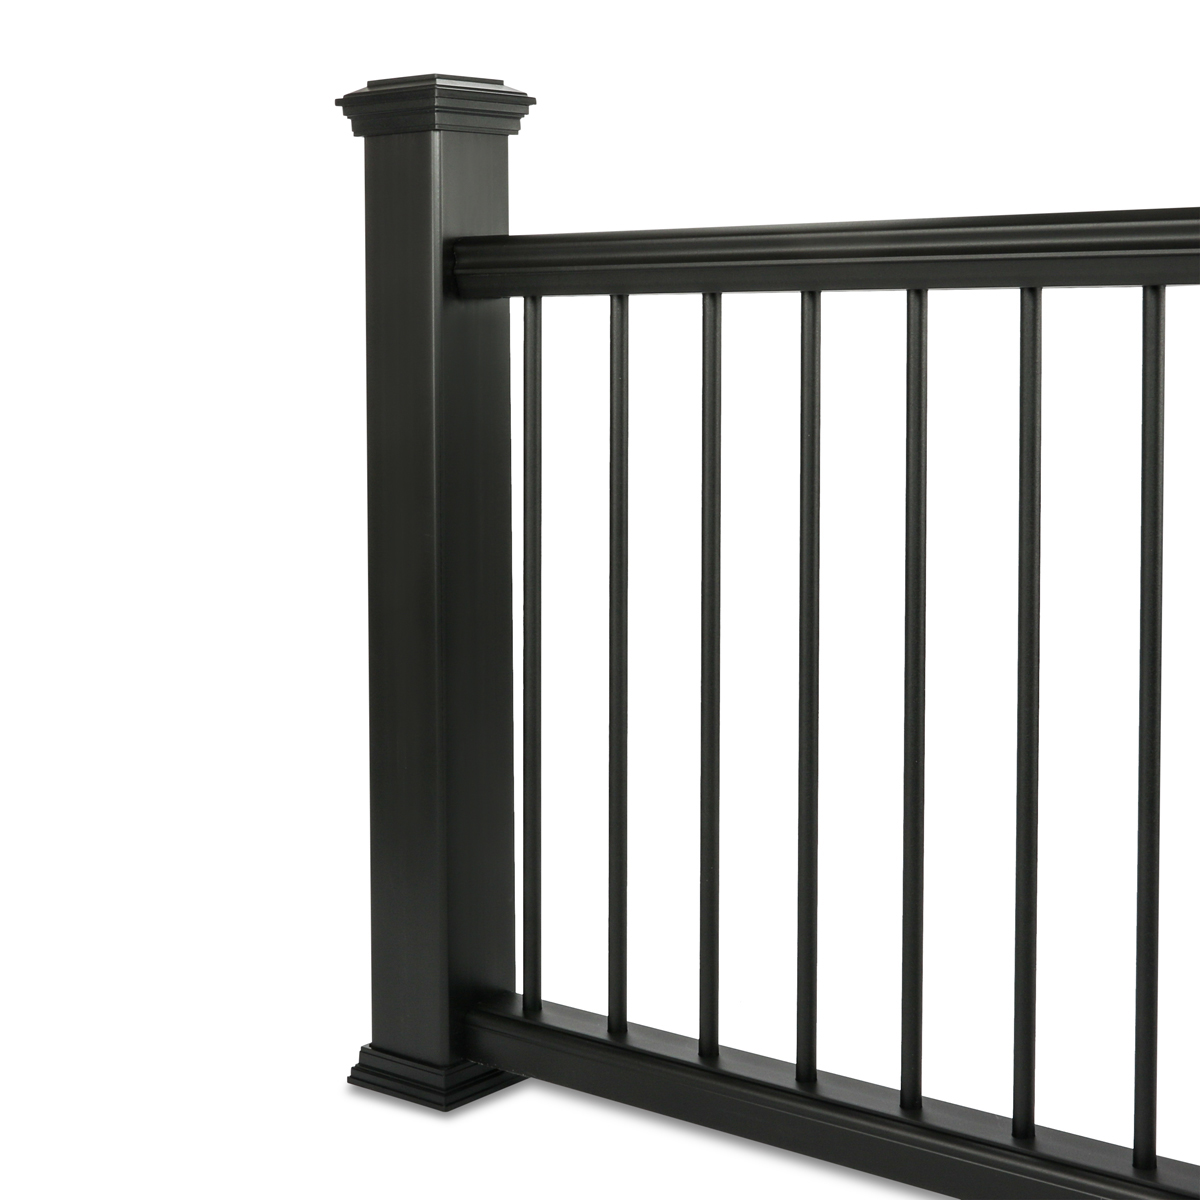 Trex Transcend composite railing in a sleek black color with black aluminum balusters